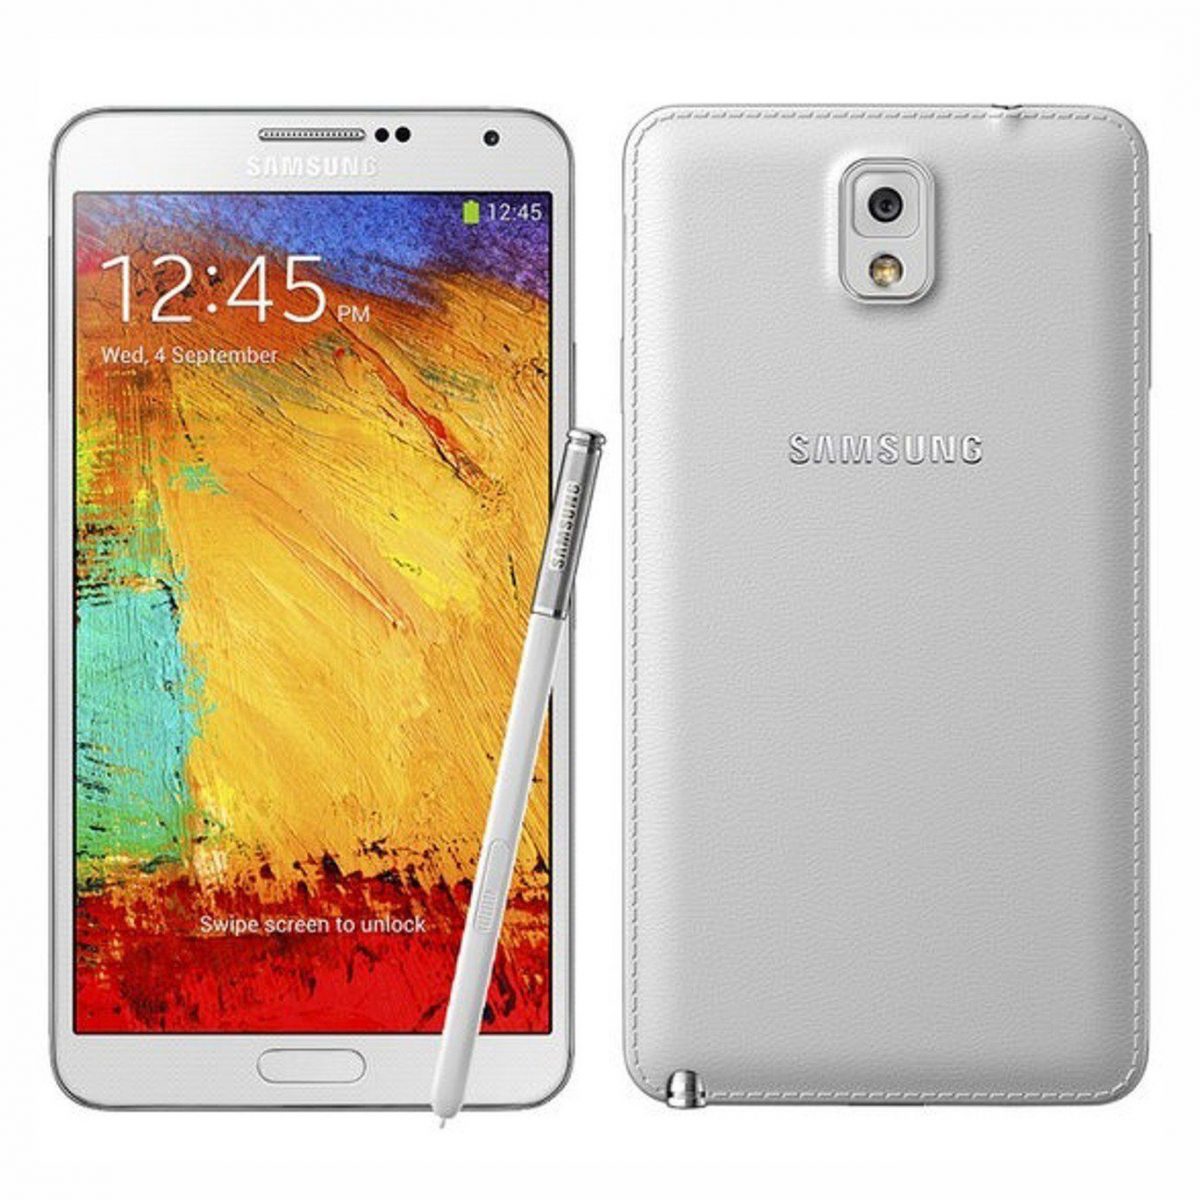 Samsung Galaxy Note 3 Smartphone N900 – Suppliers ...